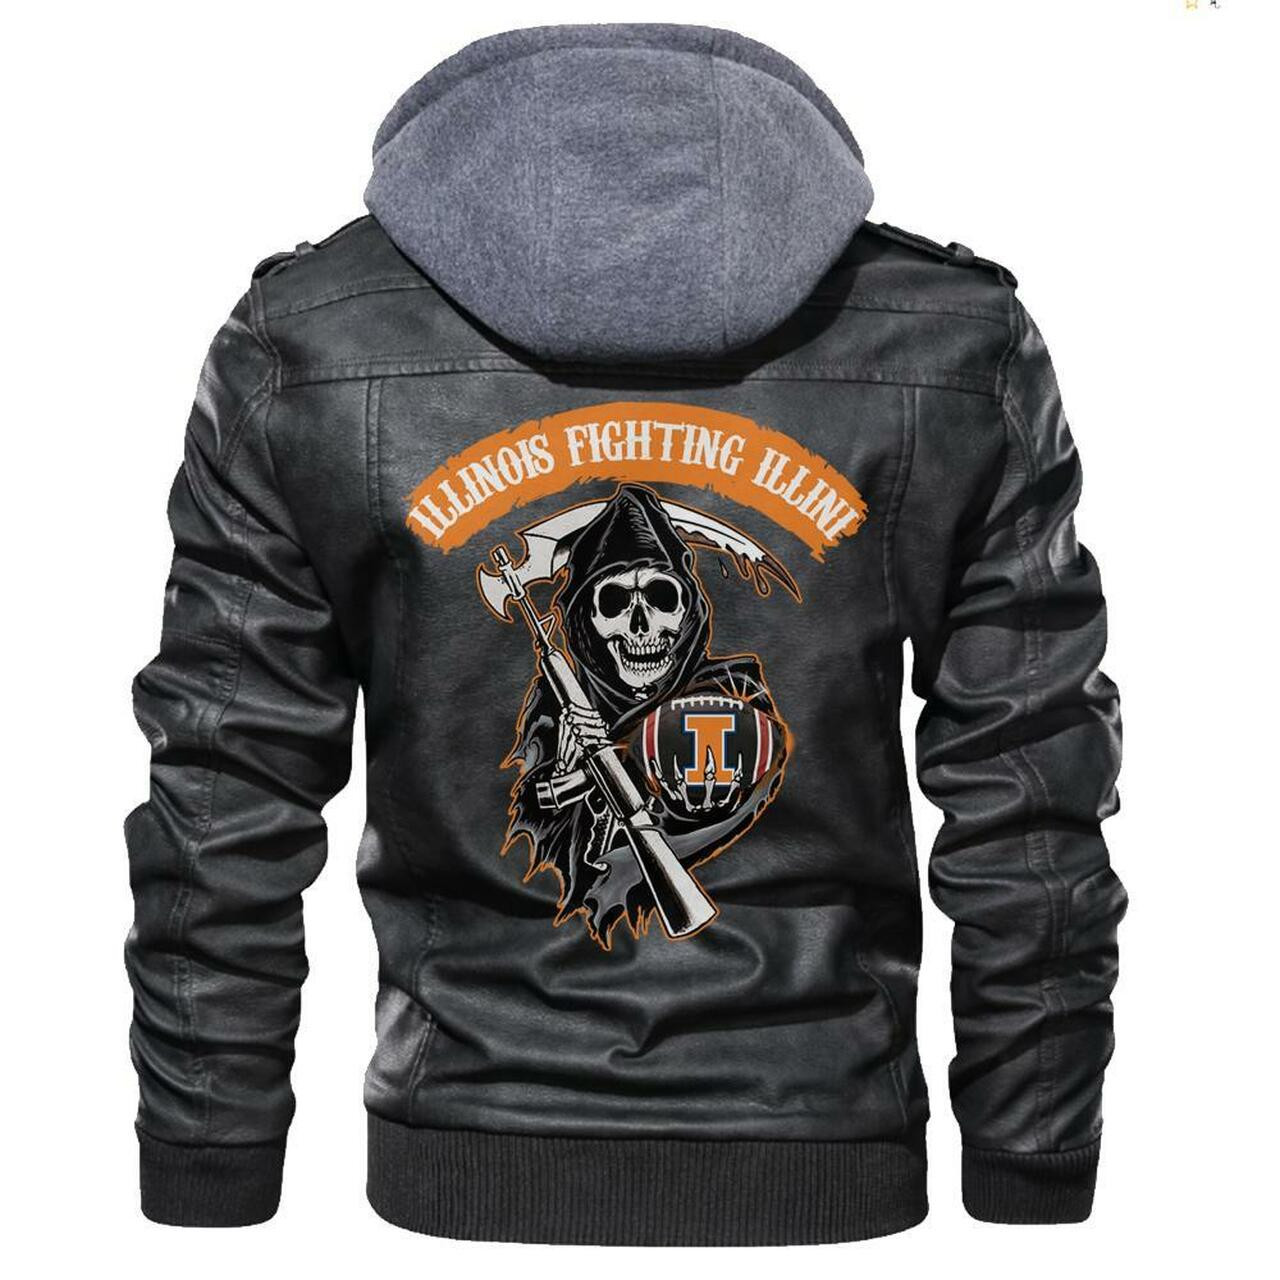 Top leather jacket Sells Best on Techcomshop 44